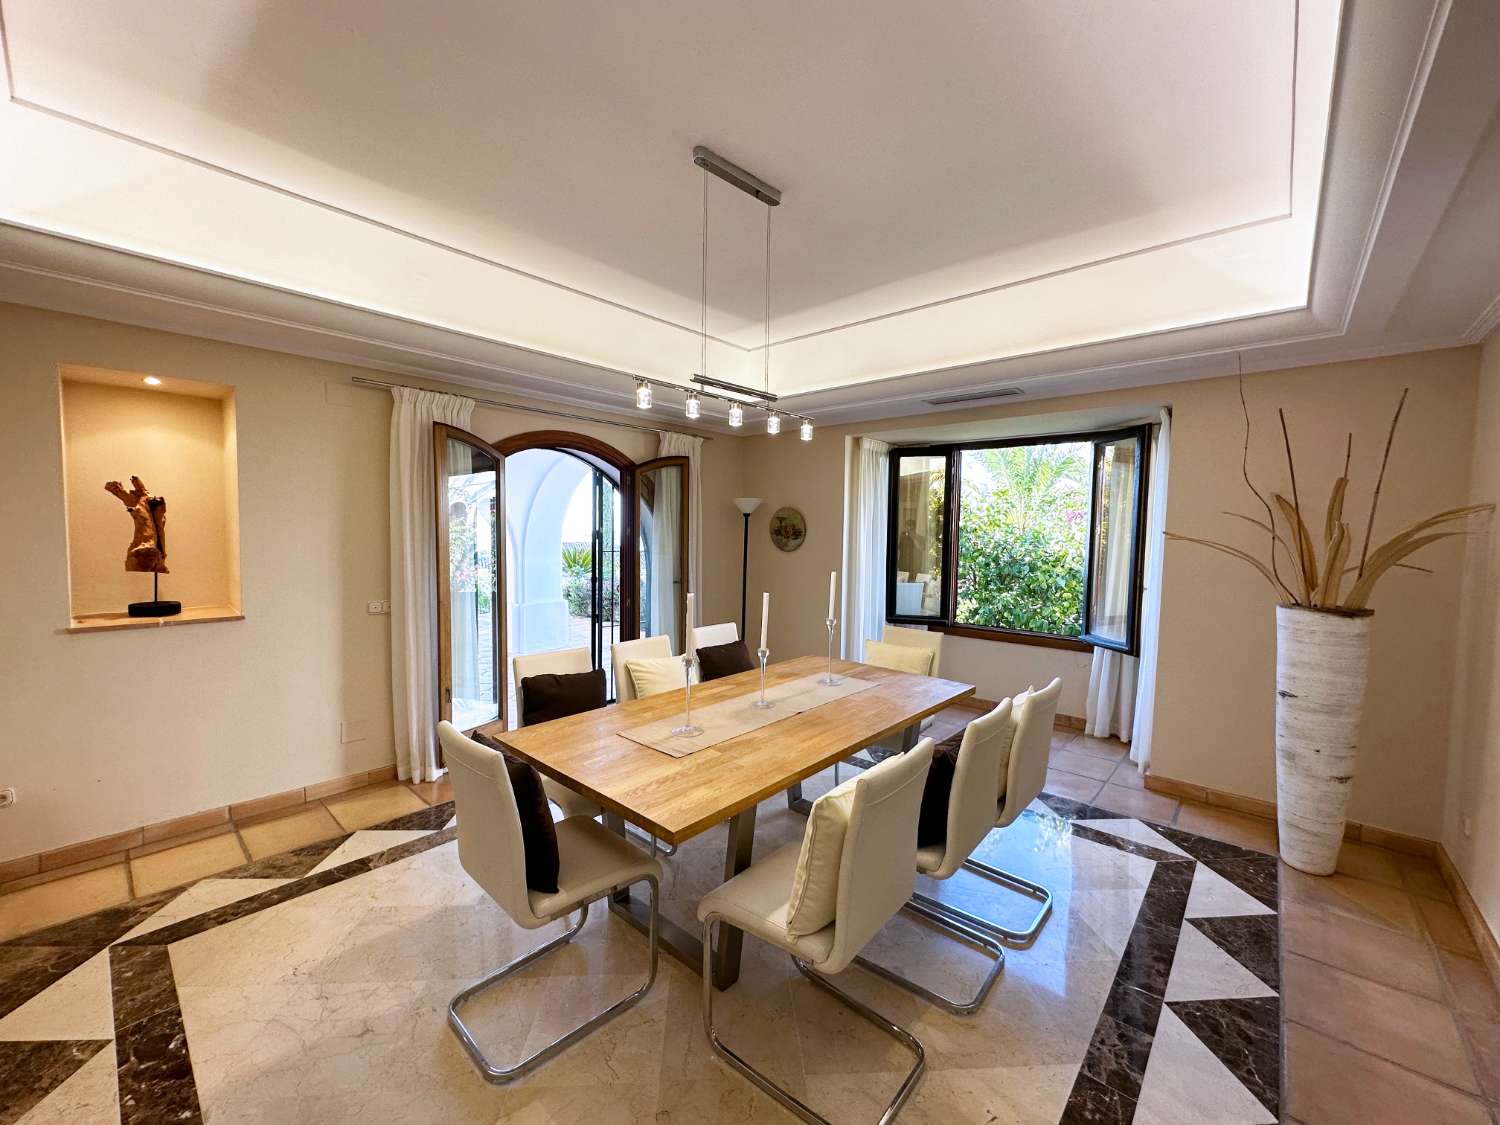 A vendre, villa de 6 chambres à Sierra Blanca, Marbella.  Terrain 2 090 m².